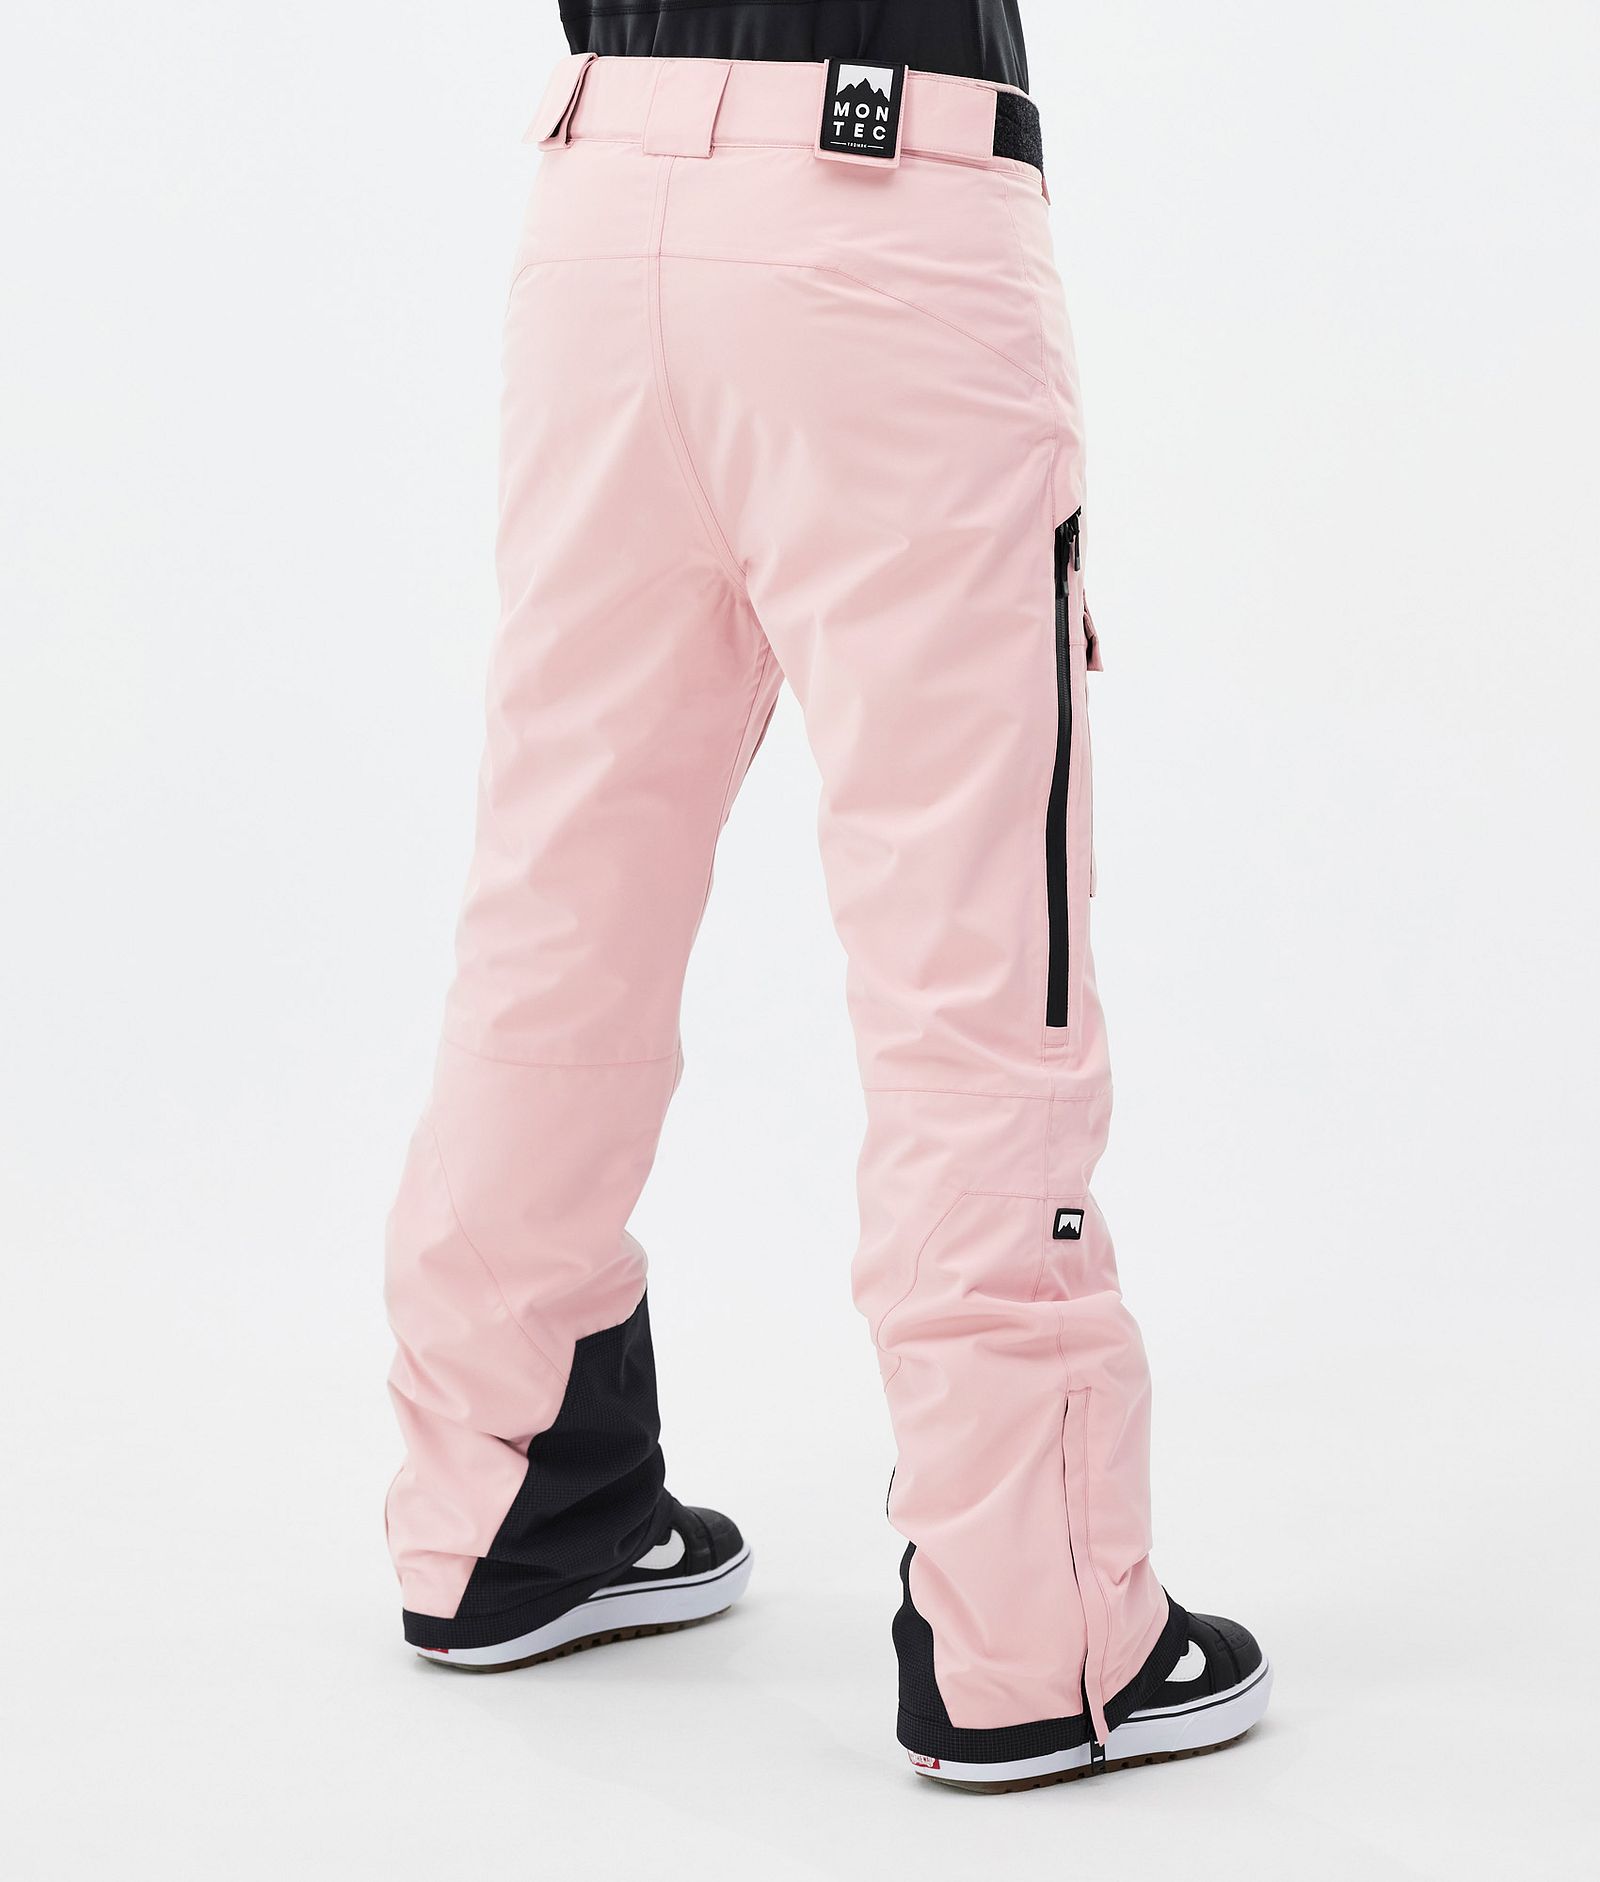 Montec Kirin W Pantalon de Snowboard Femme Soft Pink, Image 4 sur 6